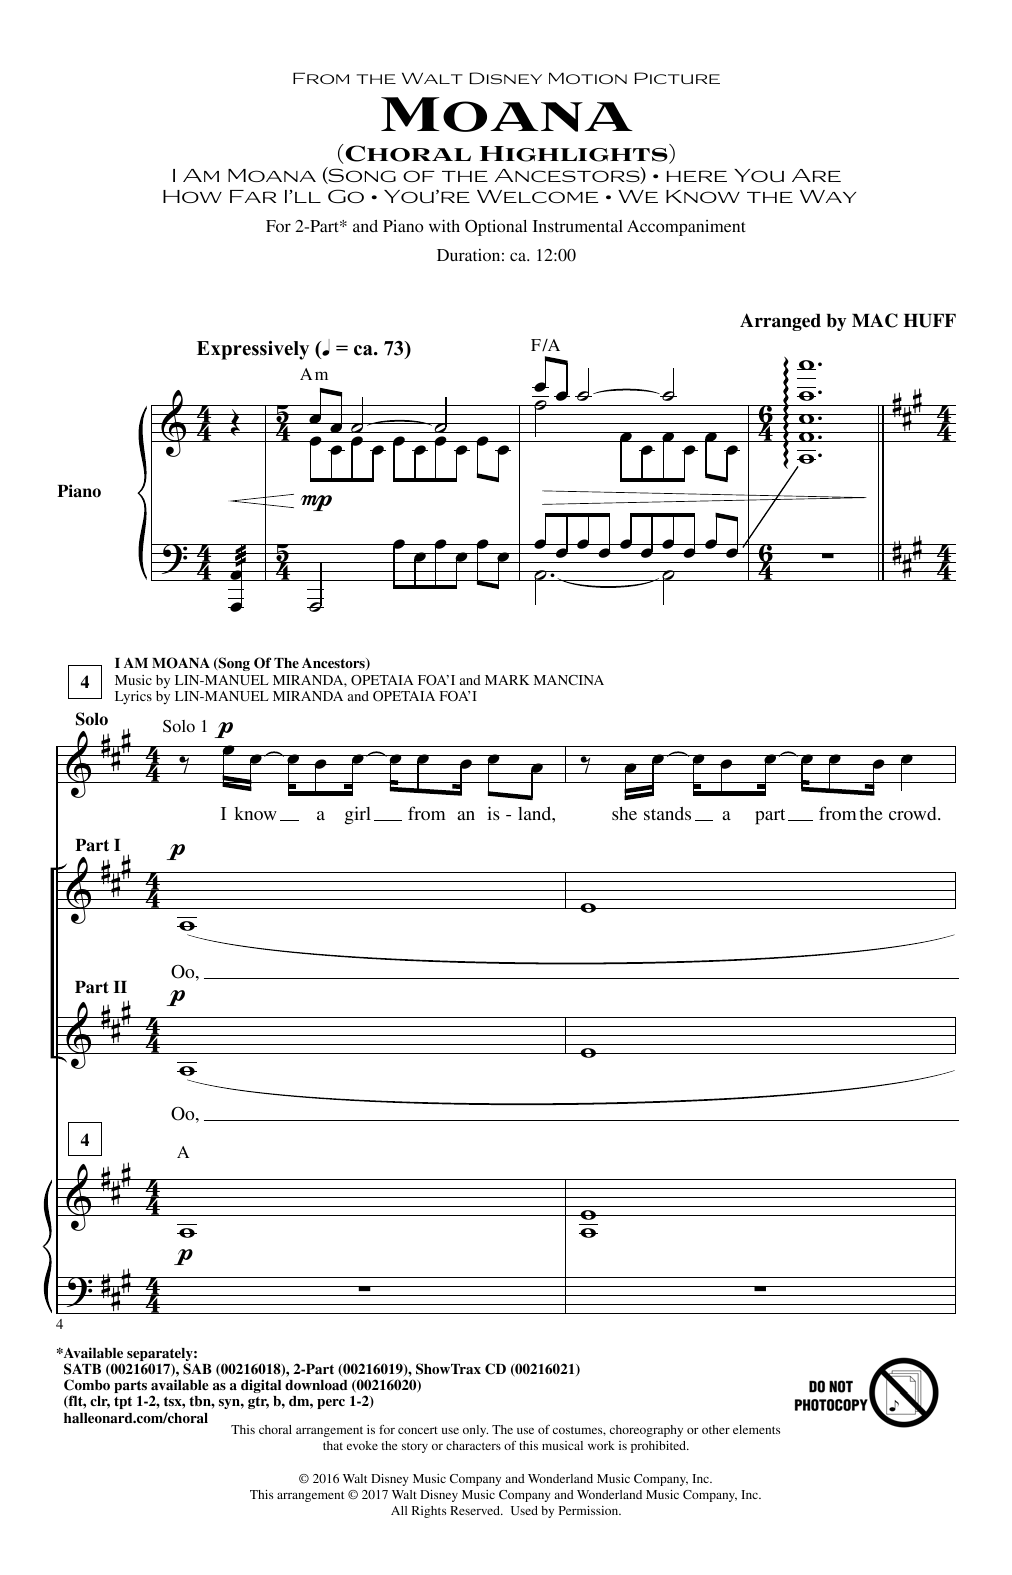 Mac Huff Moana (Choral Highlights) Sheet Music Notes & Chords for 2-Part Choir - Download or Print PDF